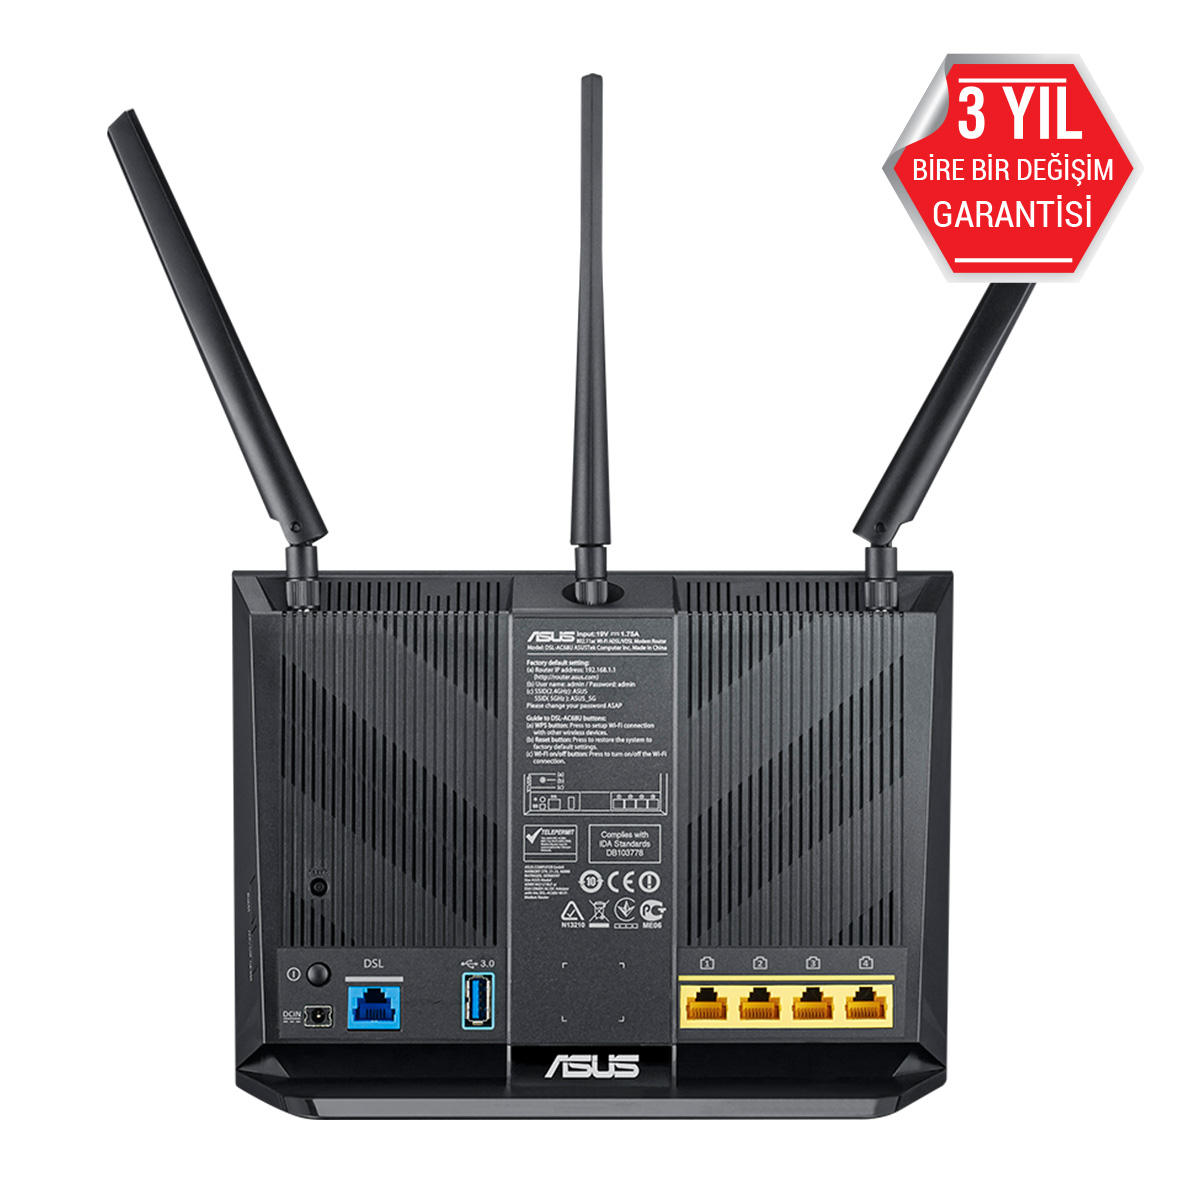 ASUS DSL-AC68U - Wireless Router - DSL-Modem